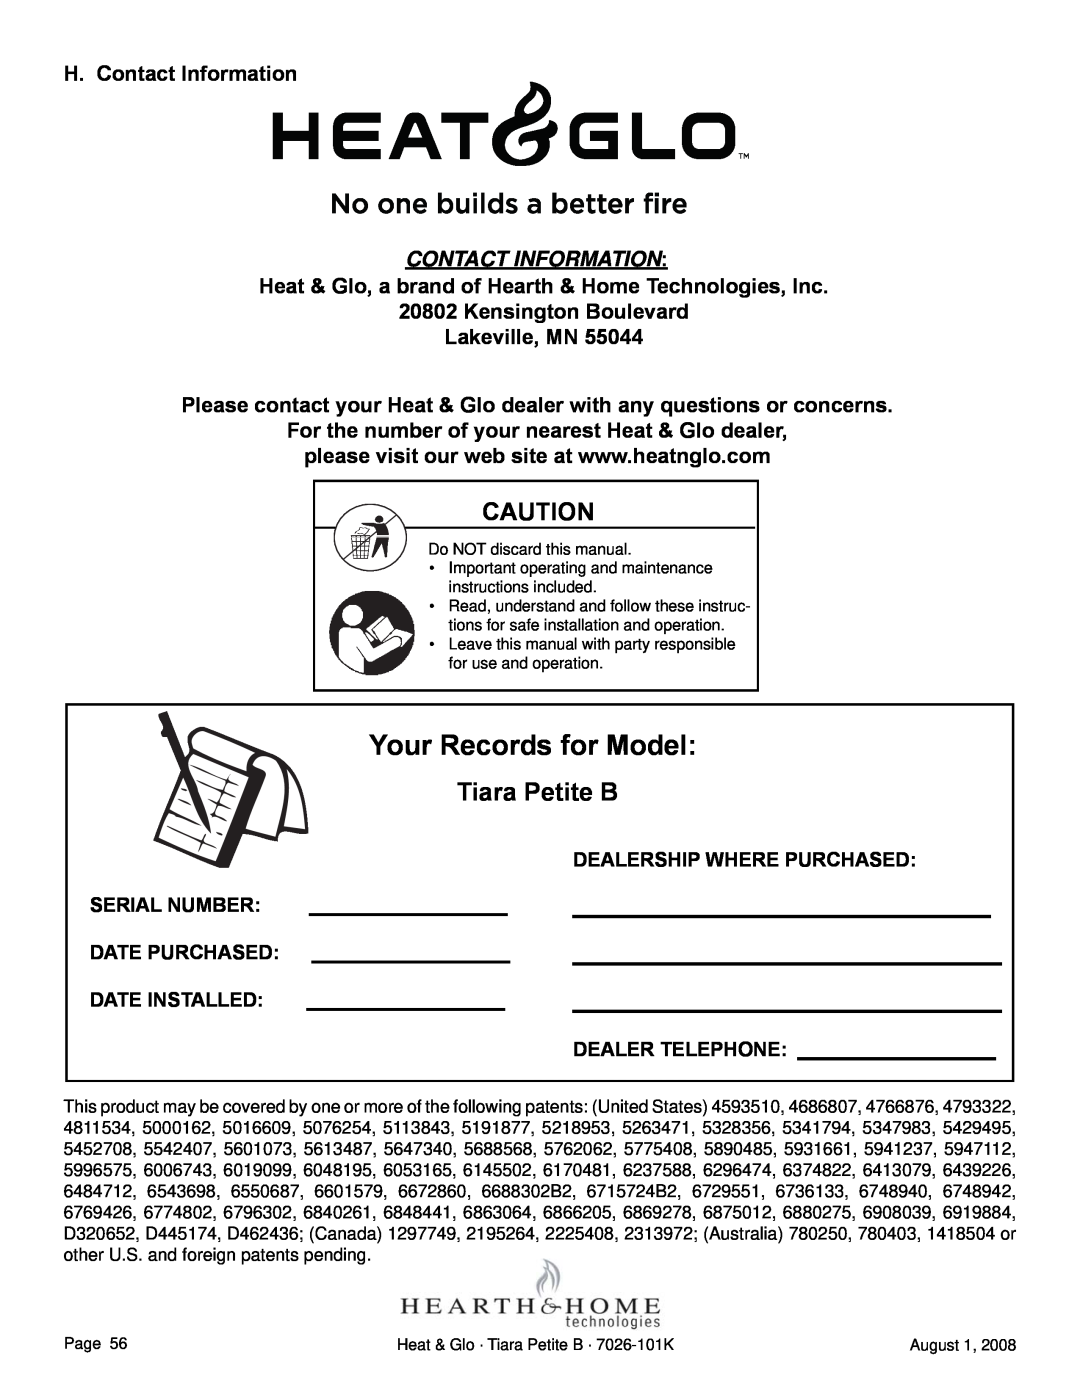 Heat & Glo LifeStyle TIARAP-CES Tiara Petite B, H. Contact Information, Kensington Boulevard Lakeville, MN, Serial Number 